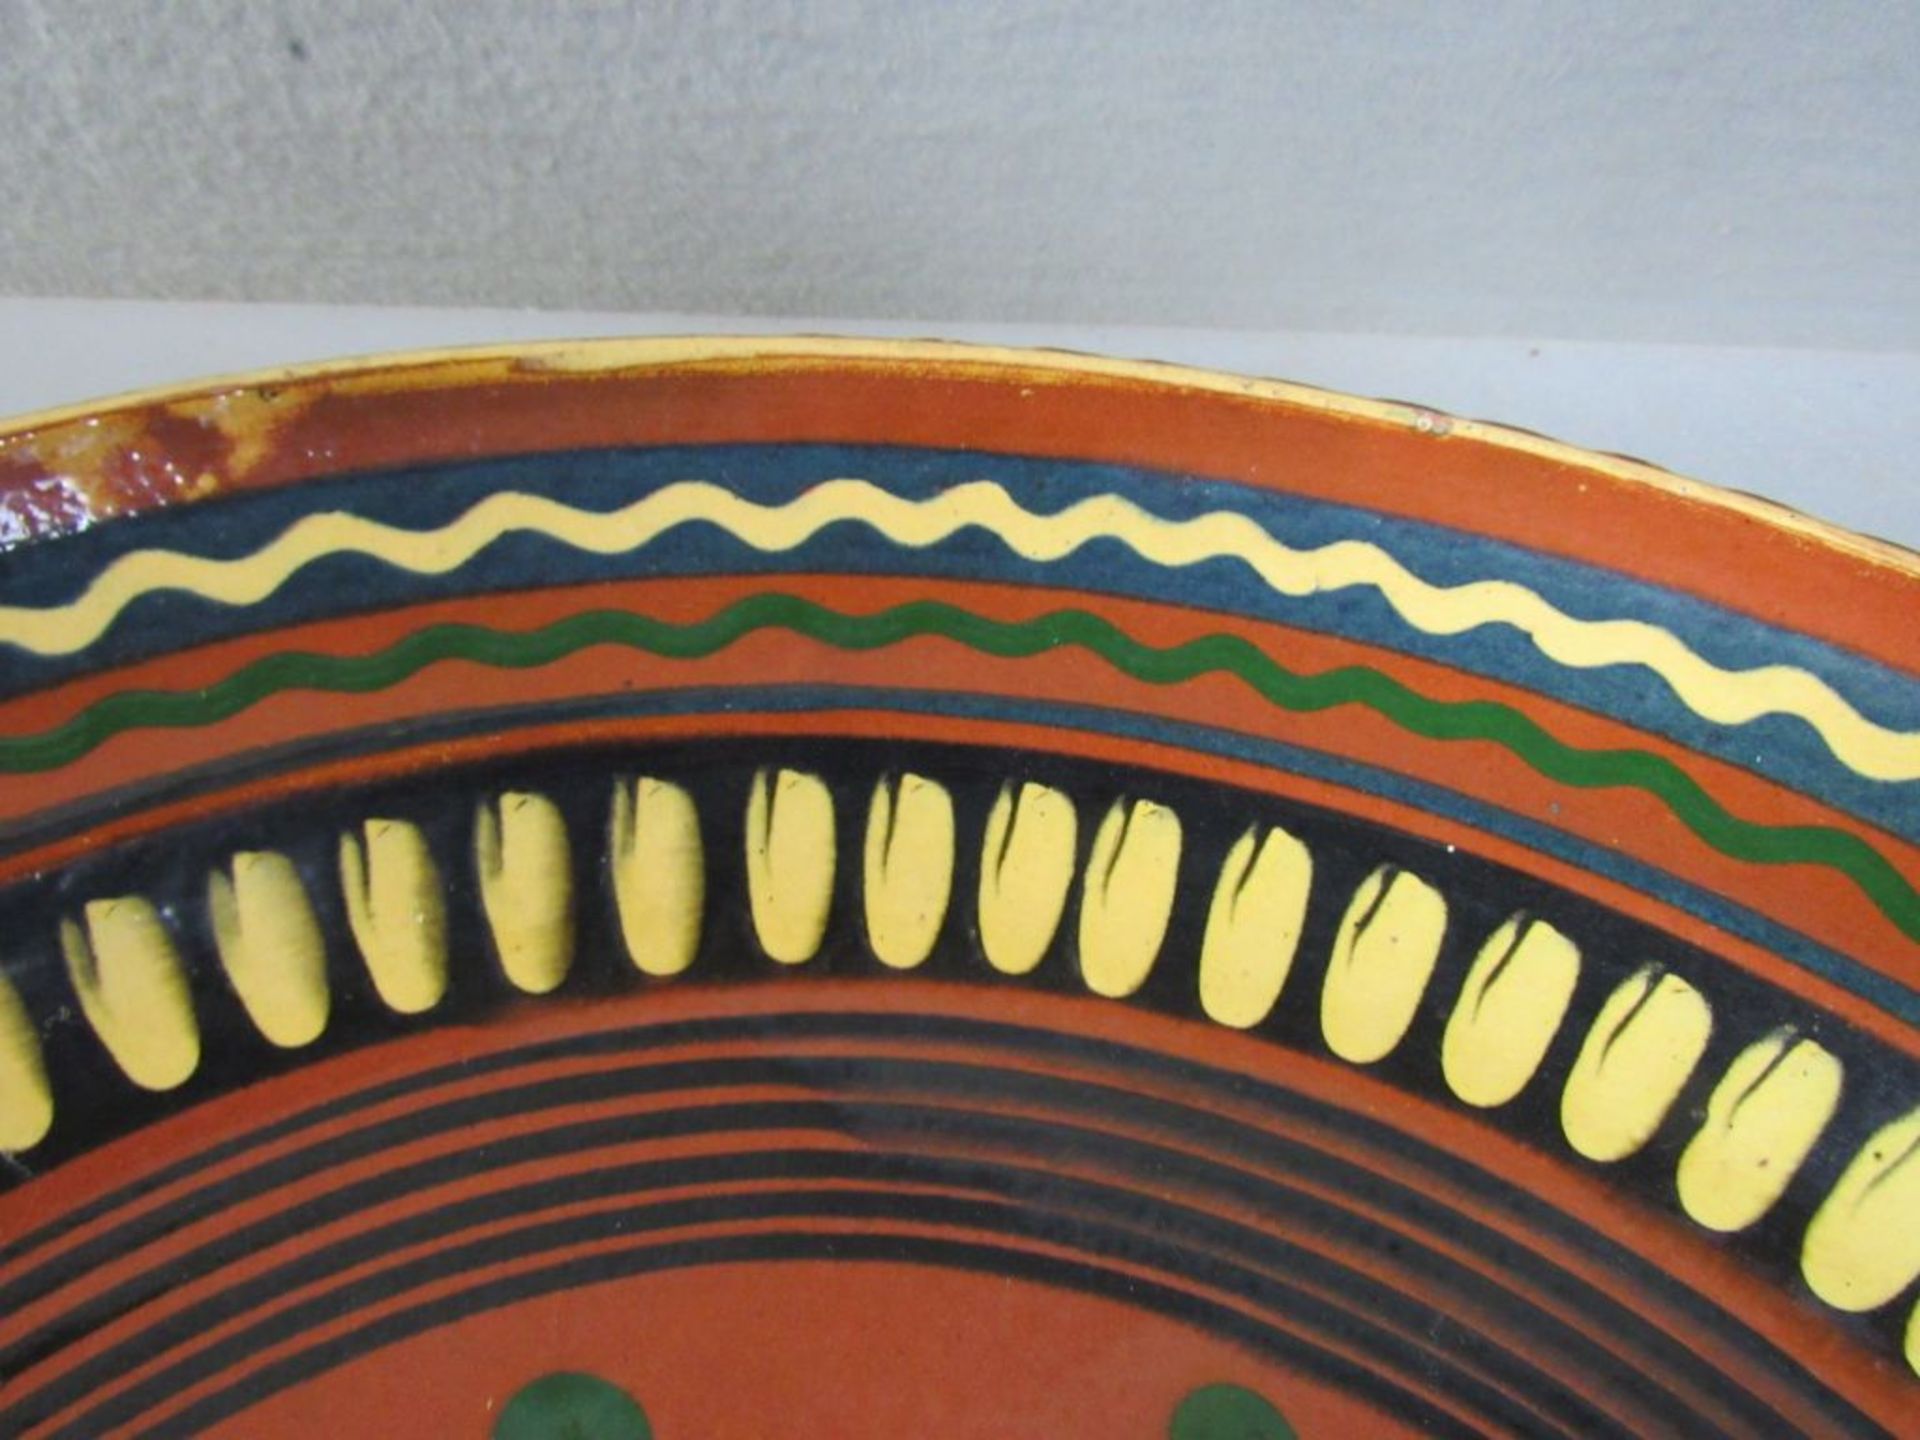 Große Schale lasierte Keramik 41cm - Image 4 of 6